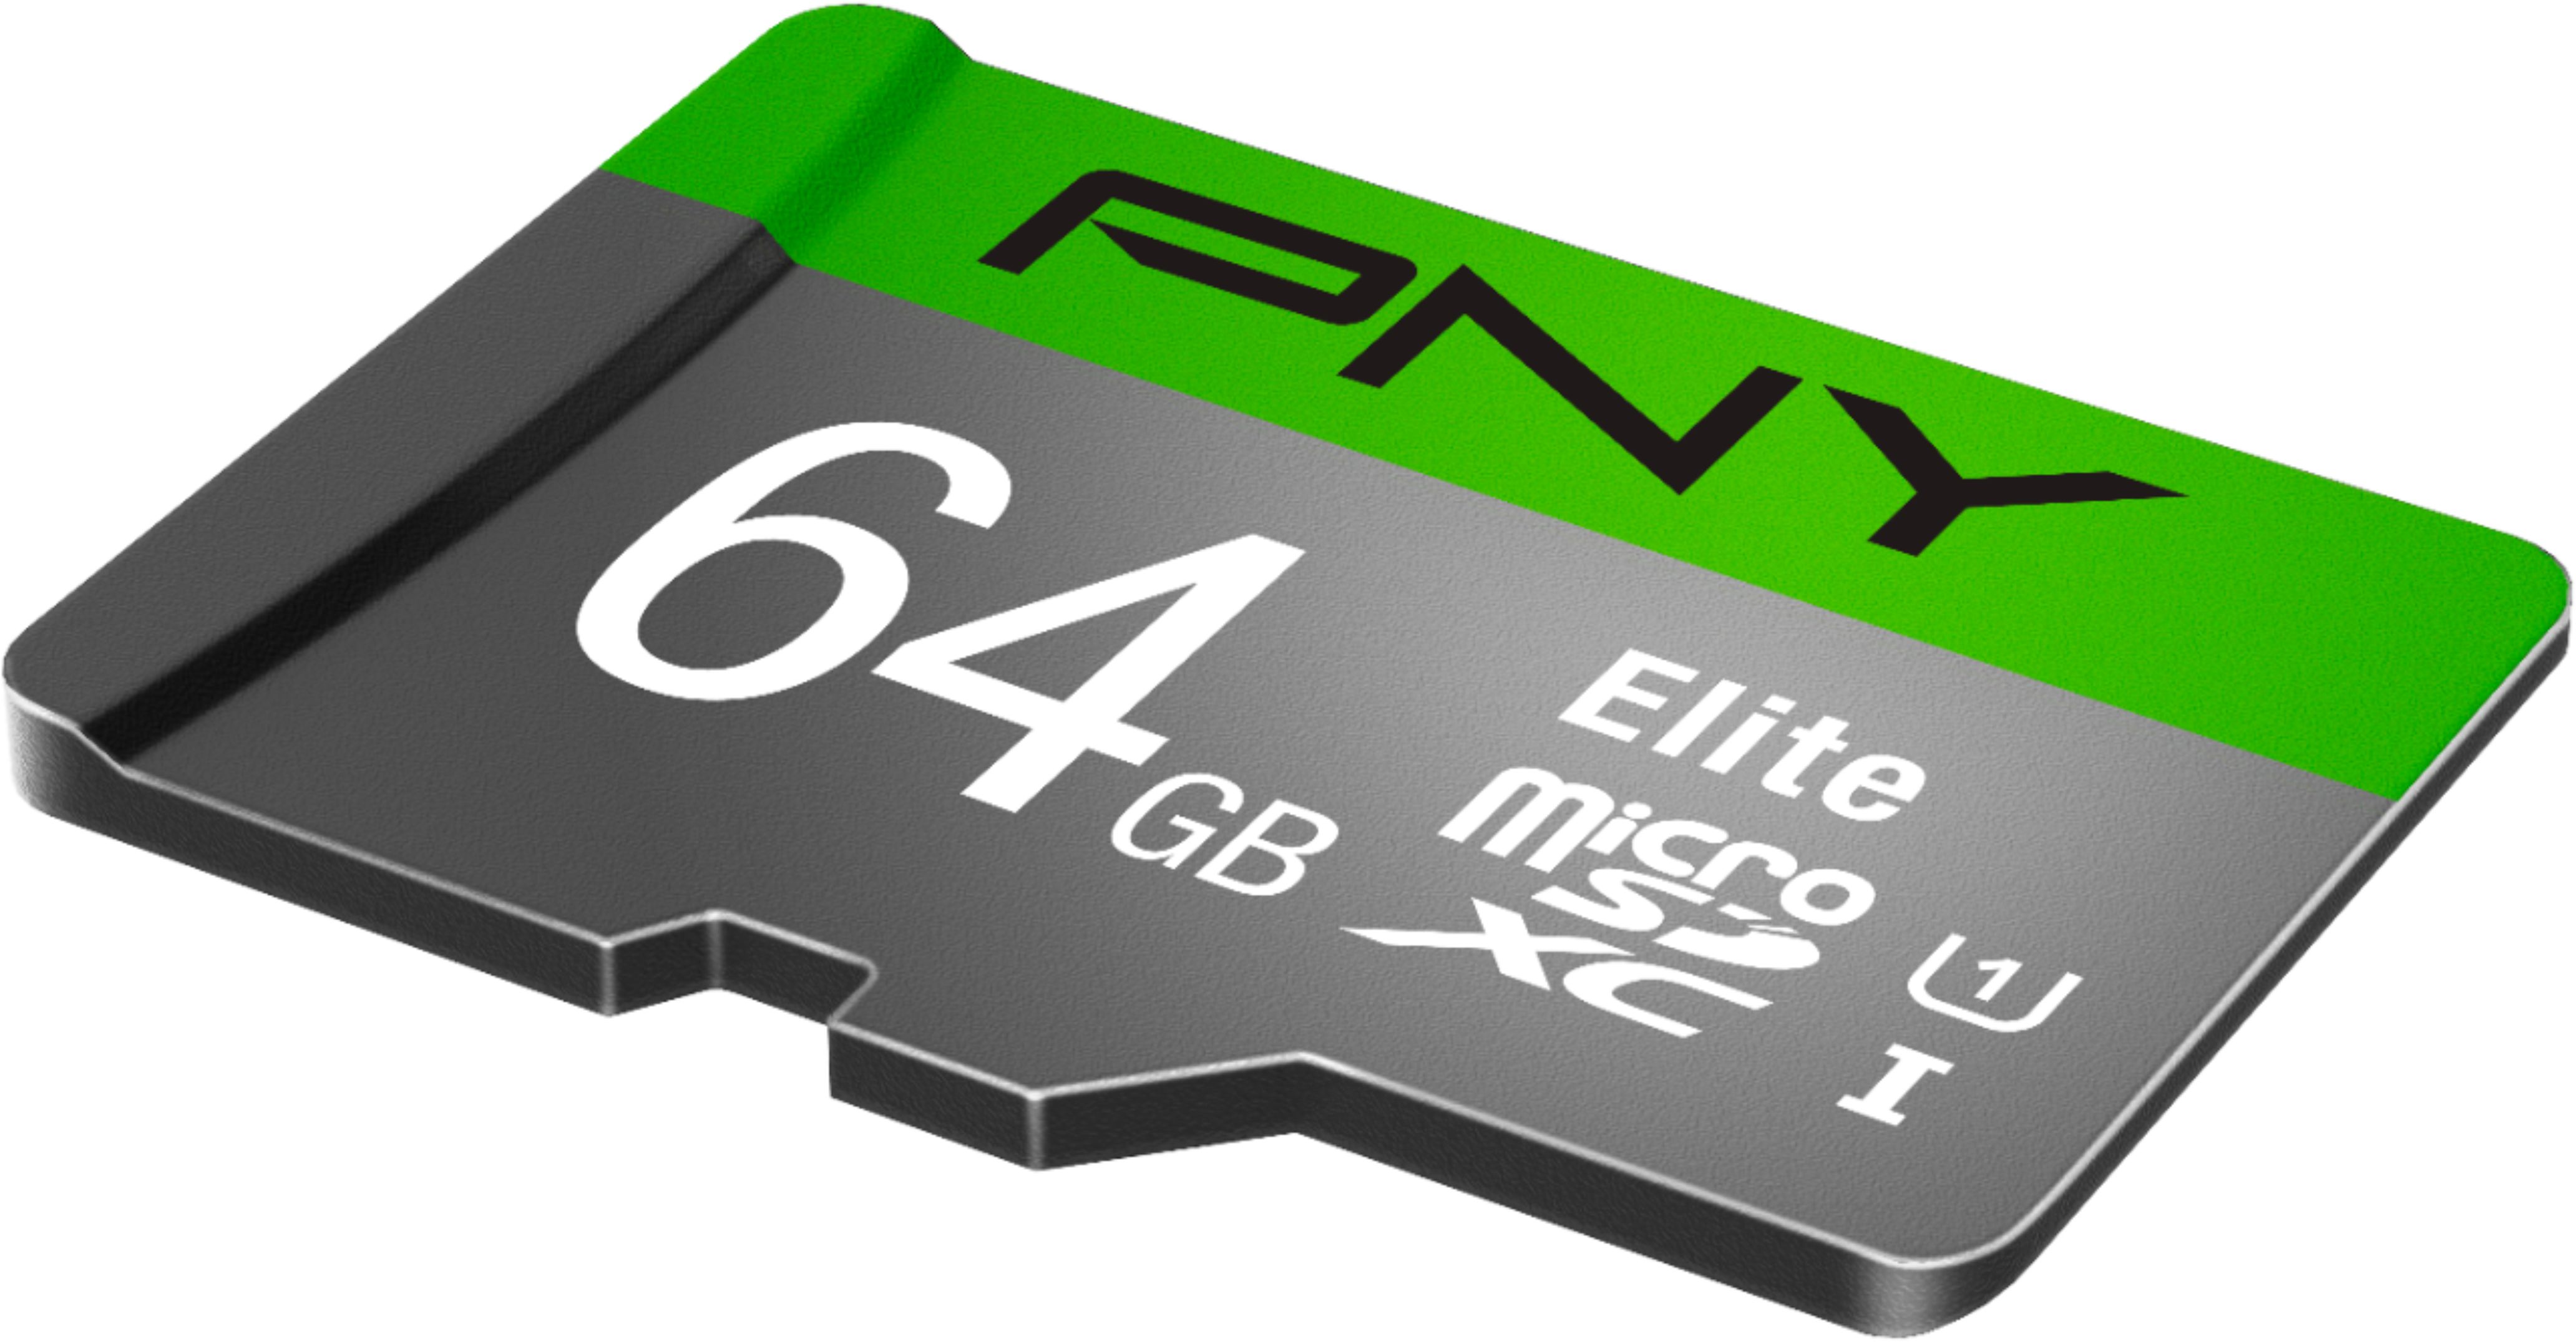 Micro Center 64GB microSDXC Card Class 10 UHS-I C10 U1 Flash